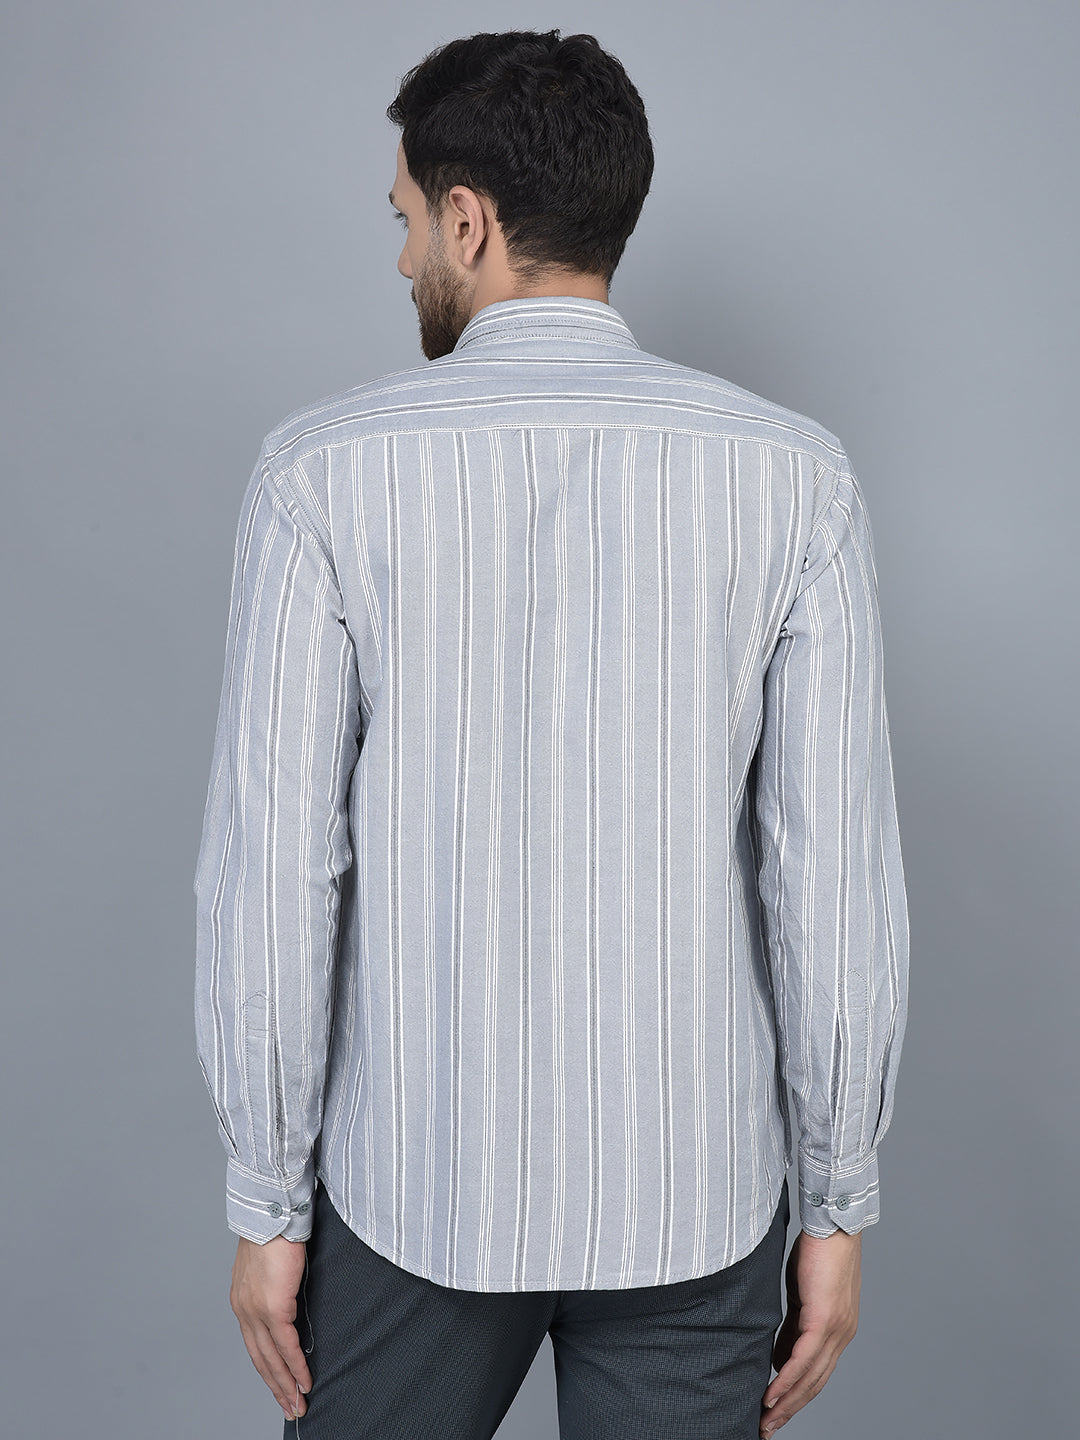 Cobb Grey Striped Slim Fit Casual Shirt